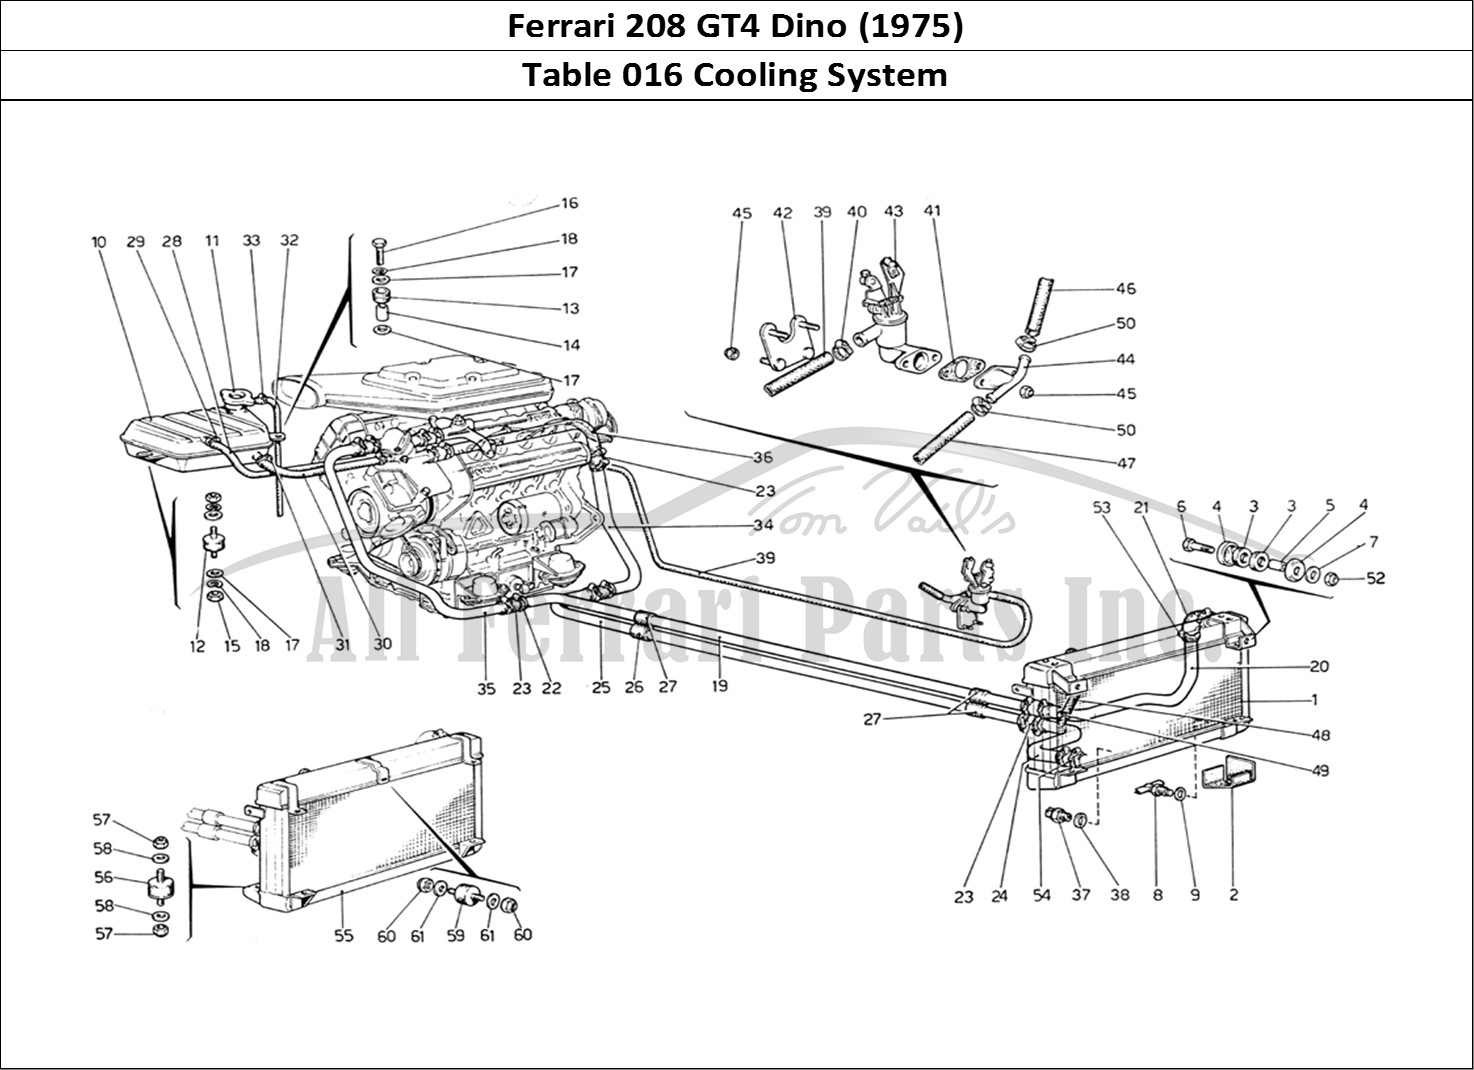 Ferrari Parts Ferrari 208 GT4 Dino (1975) Page 016 Cooling System